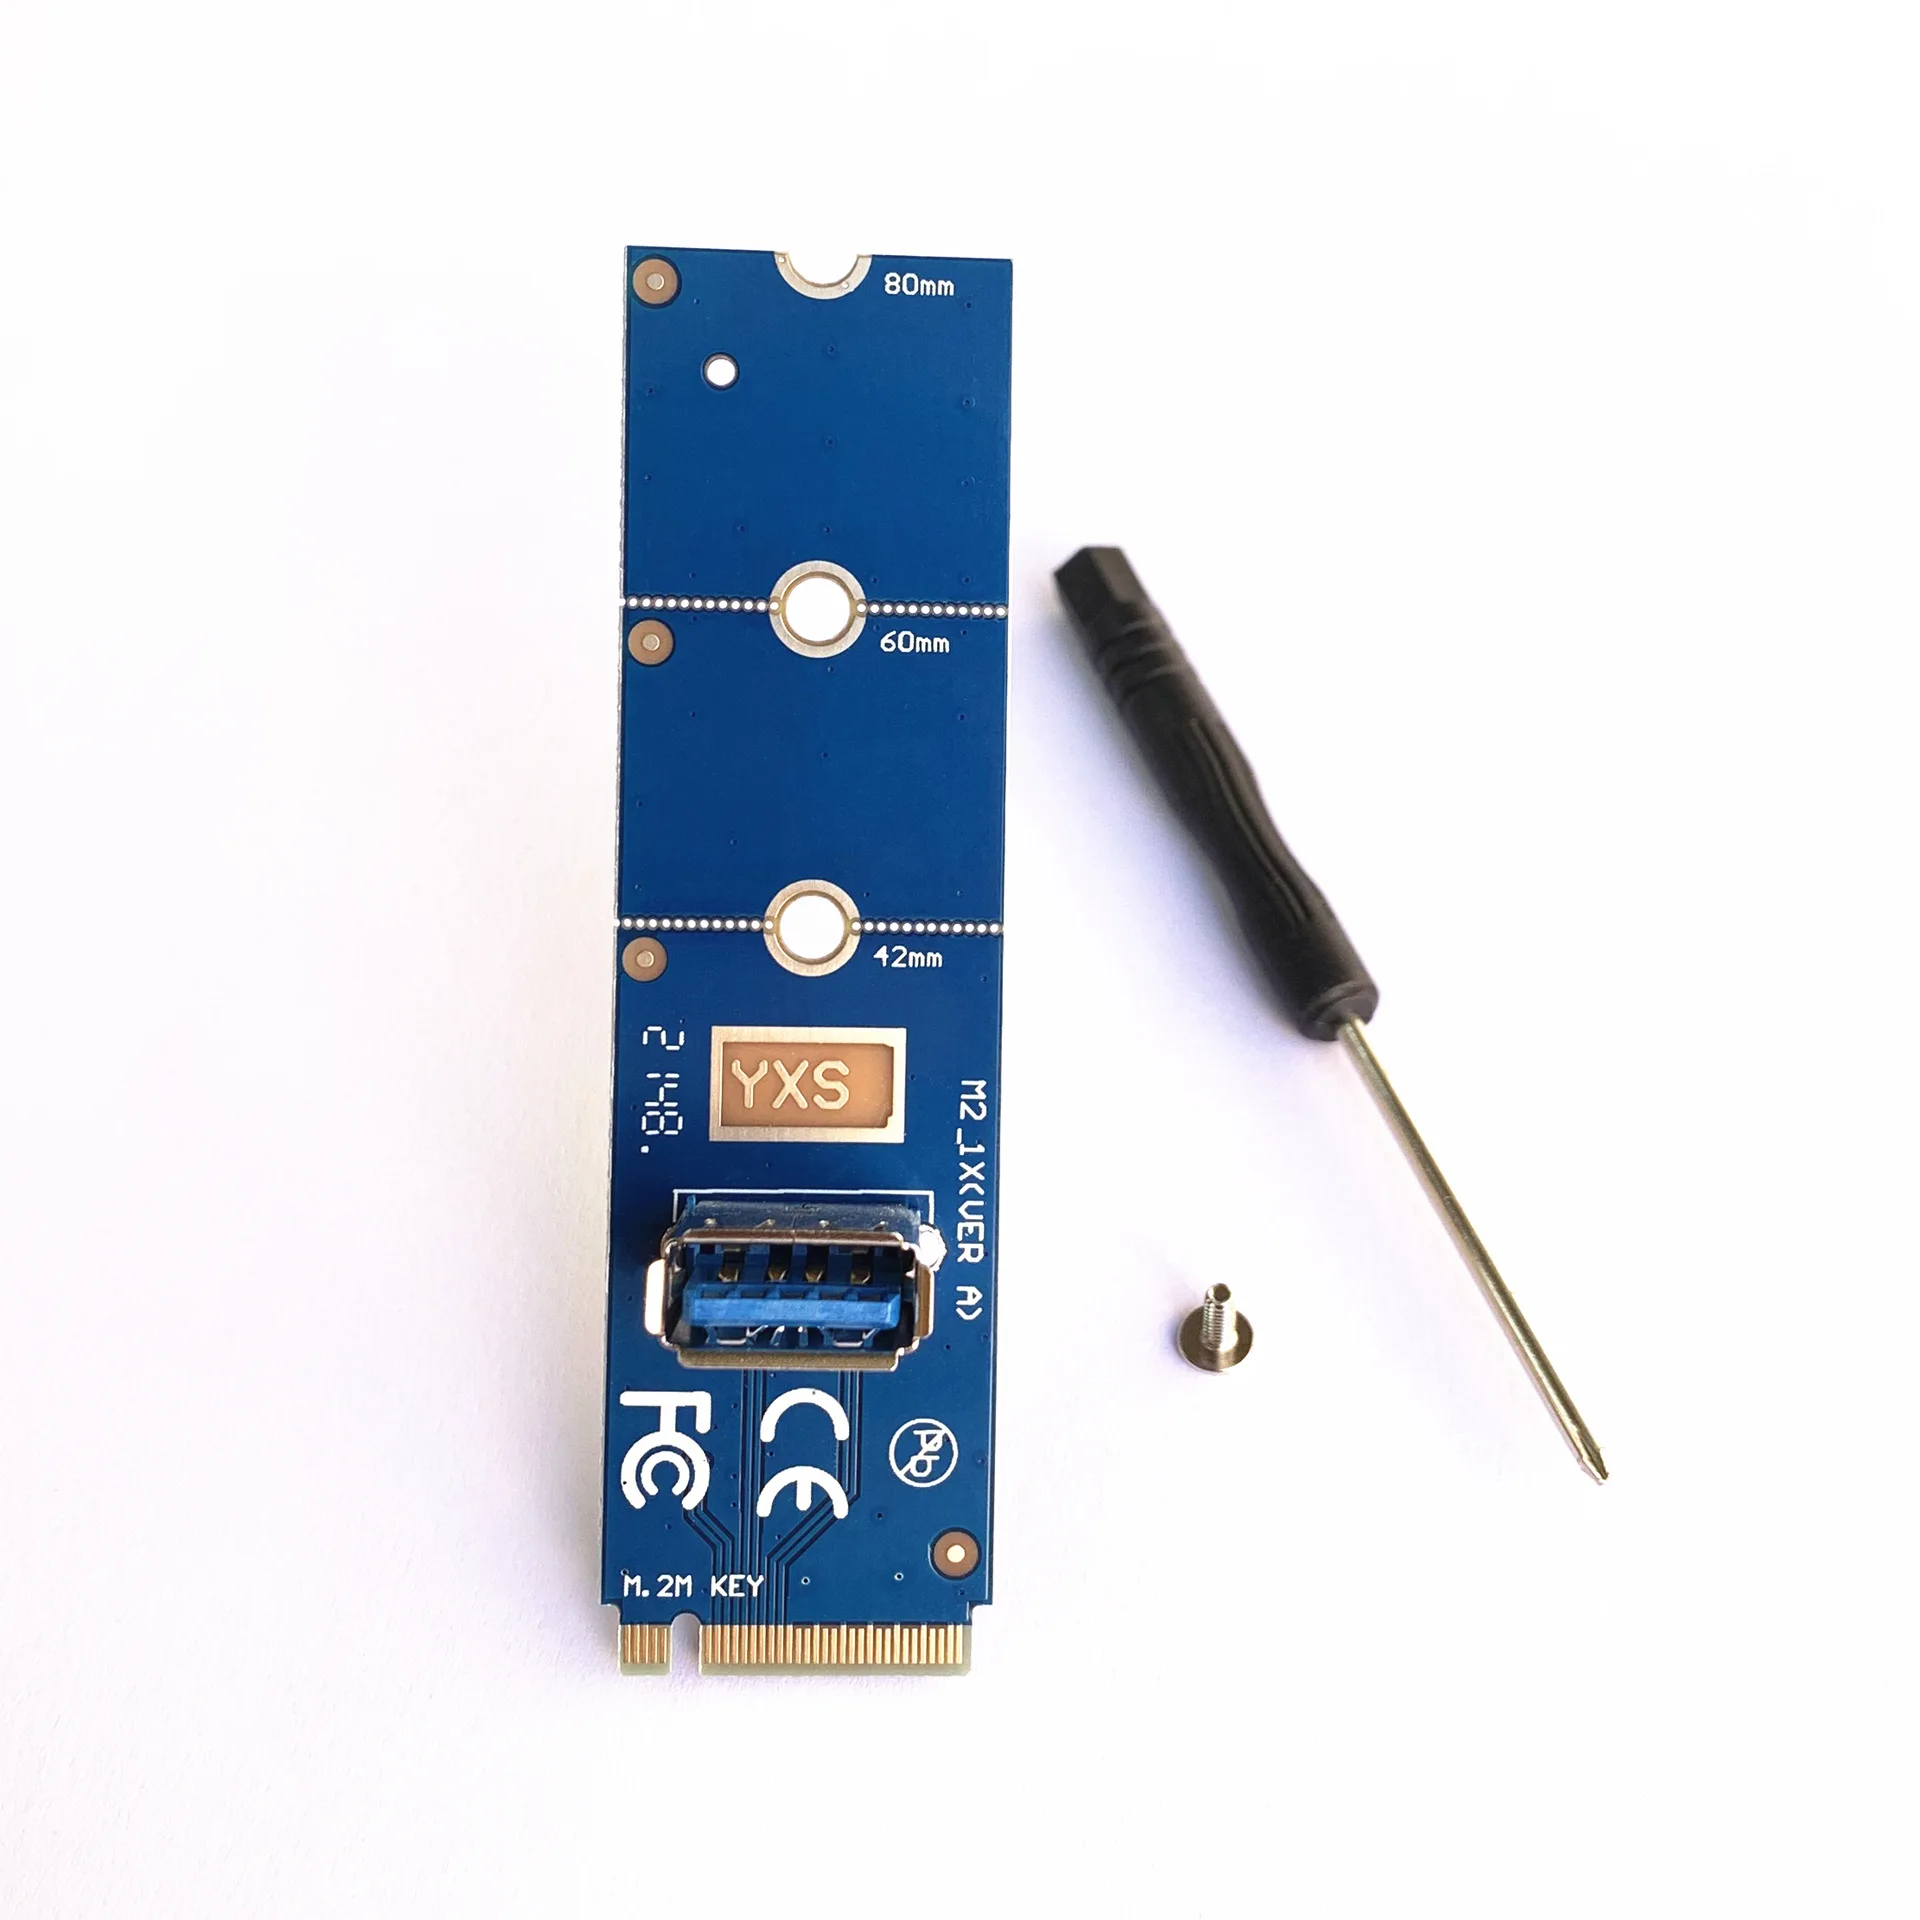 M.2 M CHIAVE NGFF A USB 3.0 Adapter Scheda per BTC Mining PCI-E X16 Convertitore 